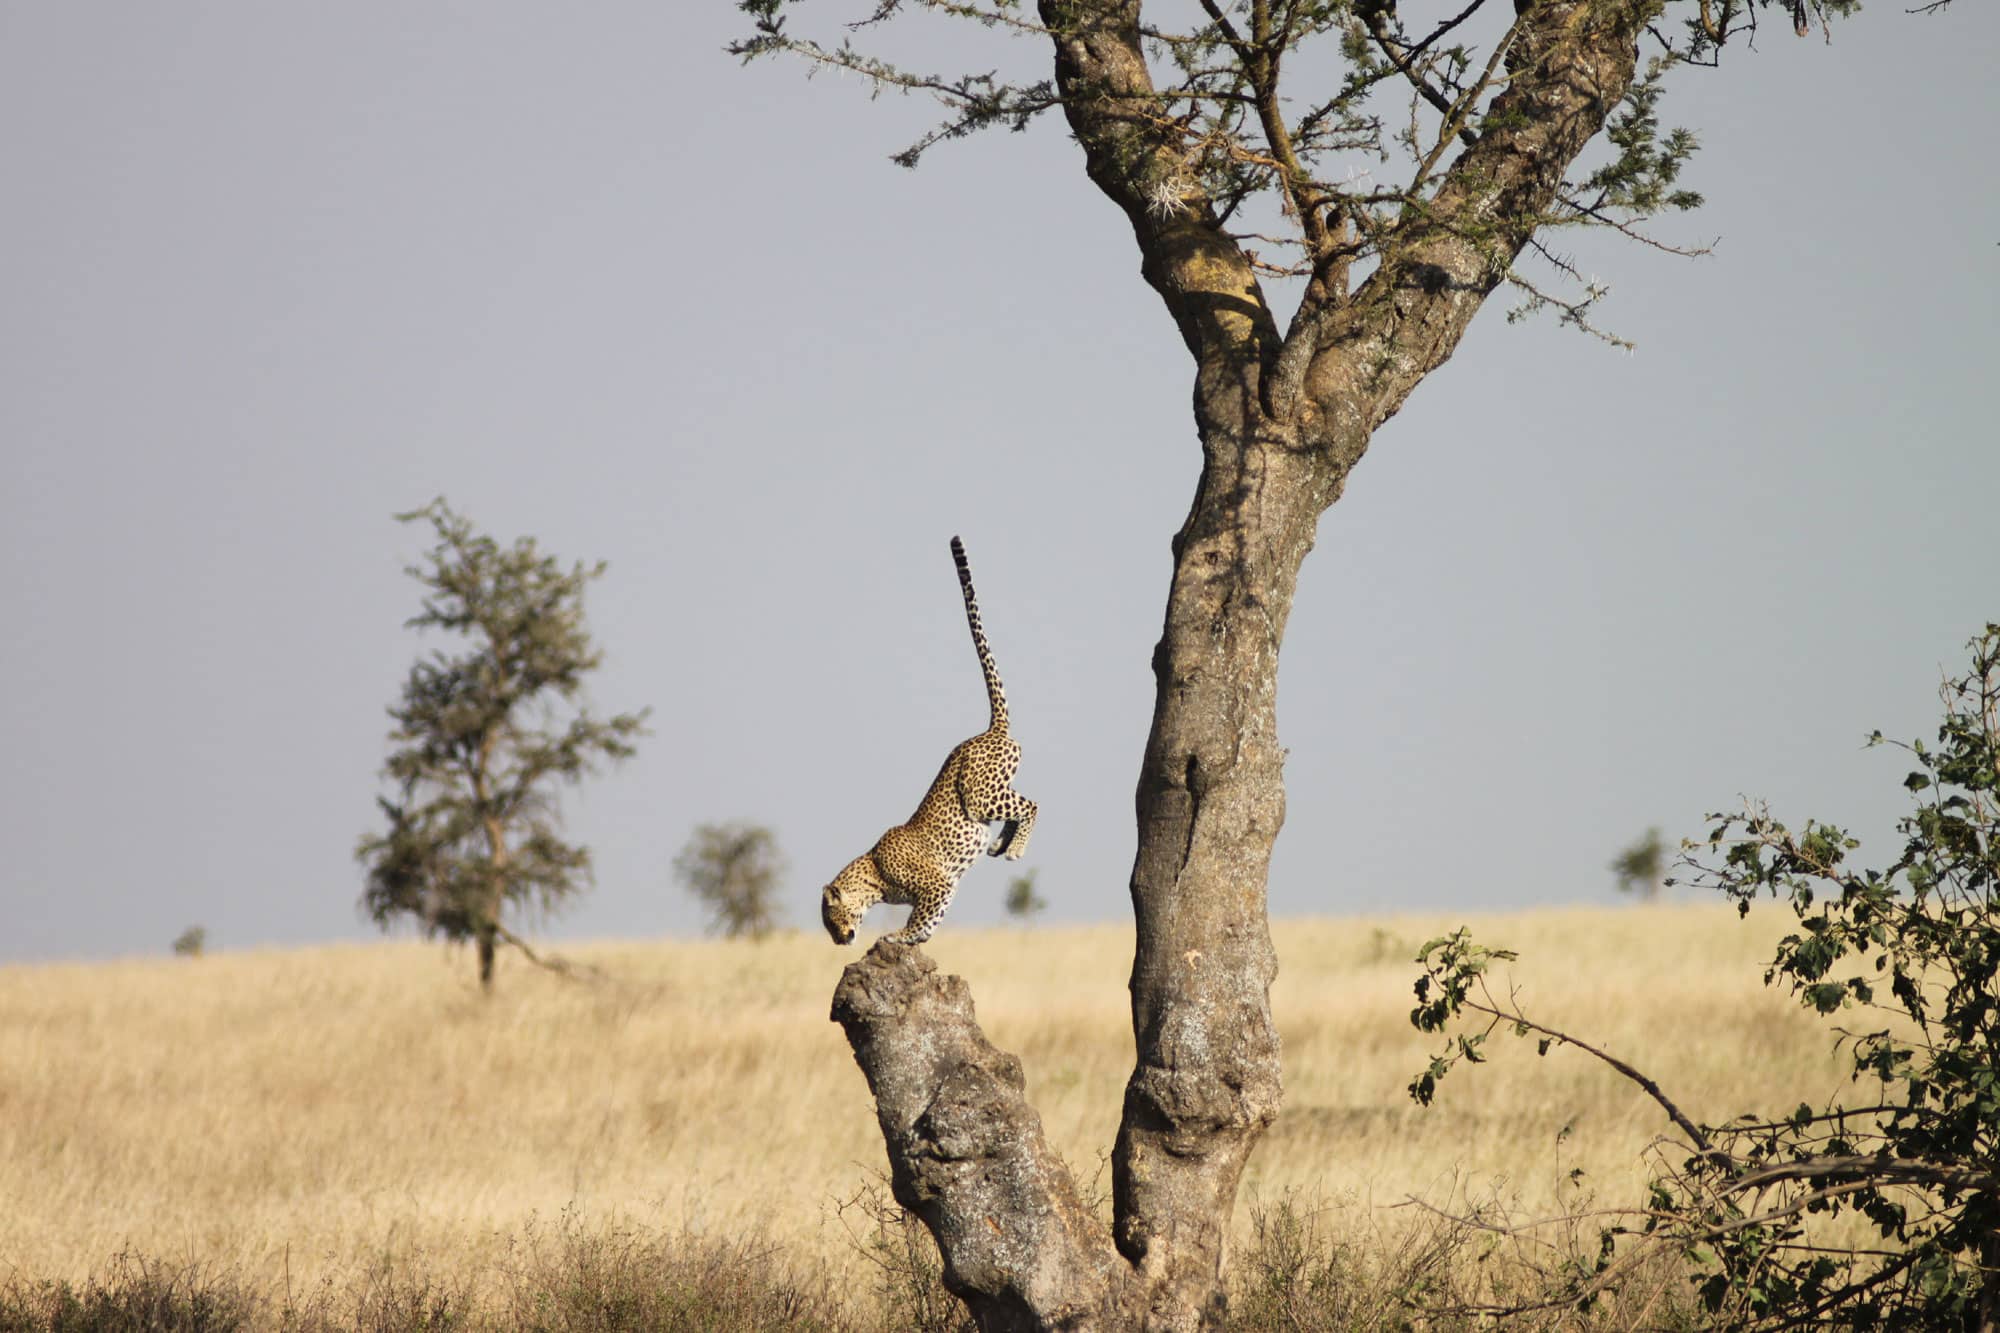 A leopard leaps onto a tree